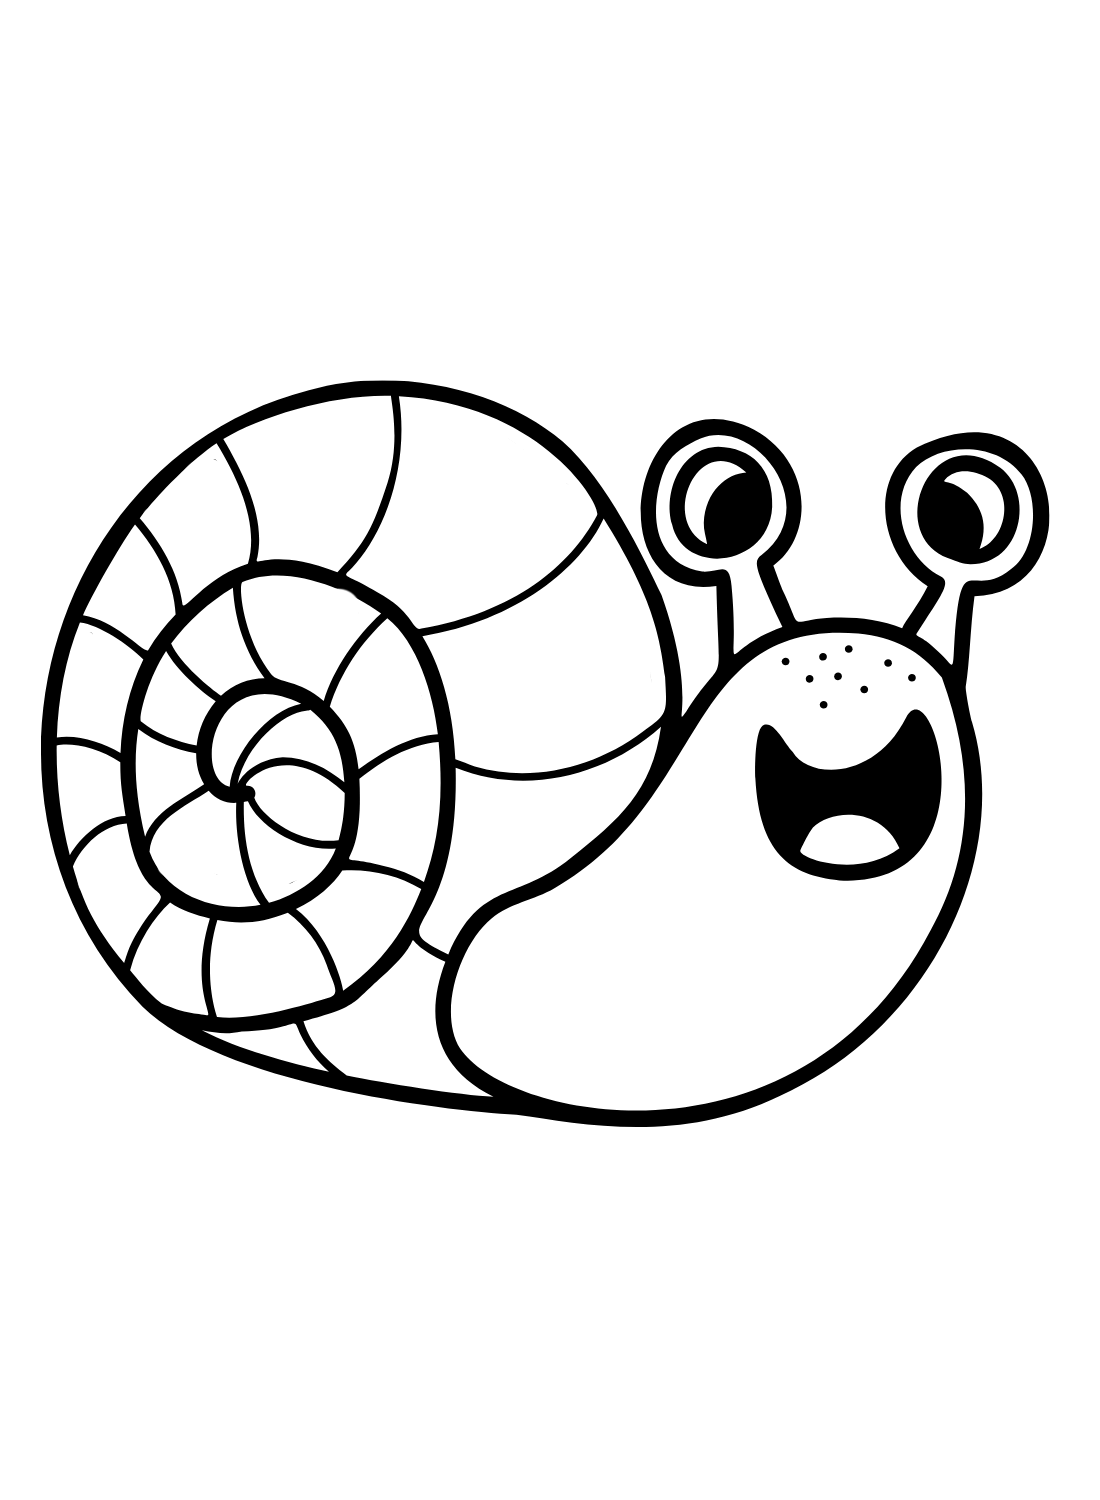 Happy Snail from Snail